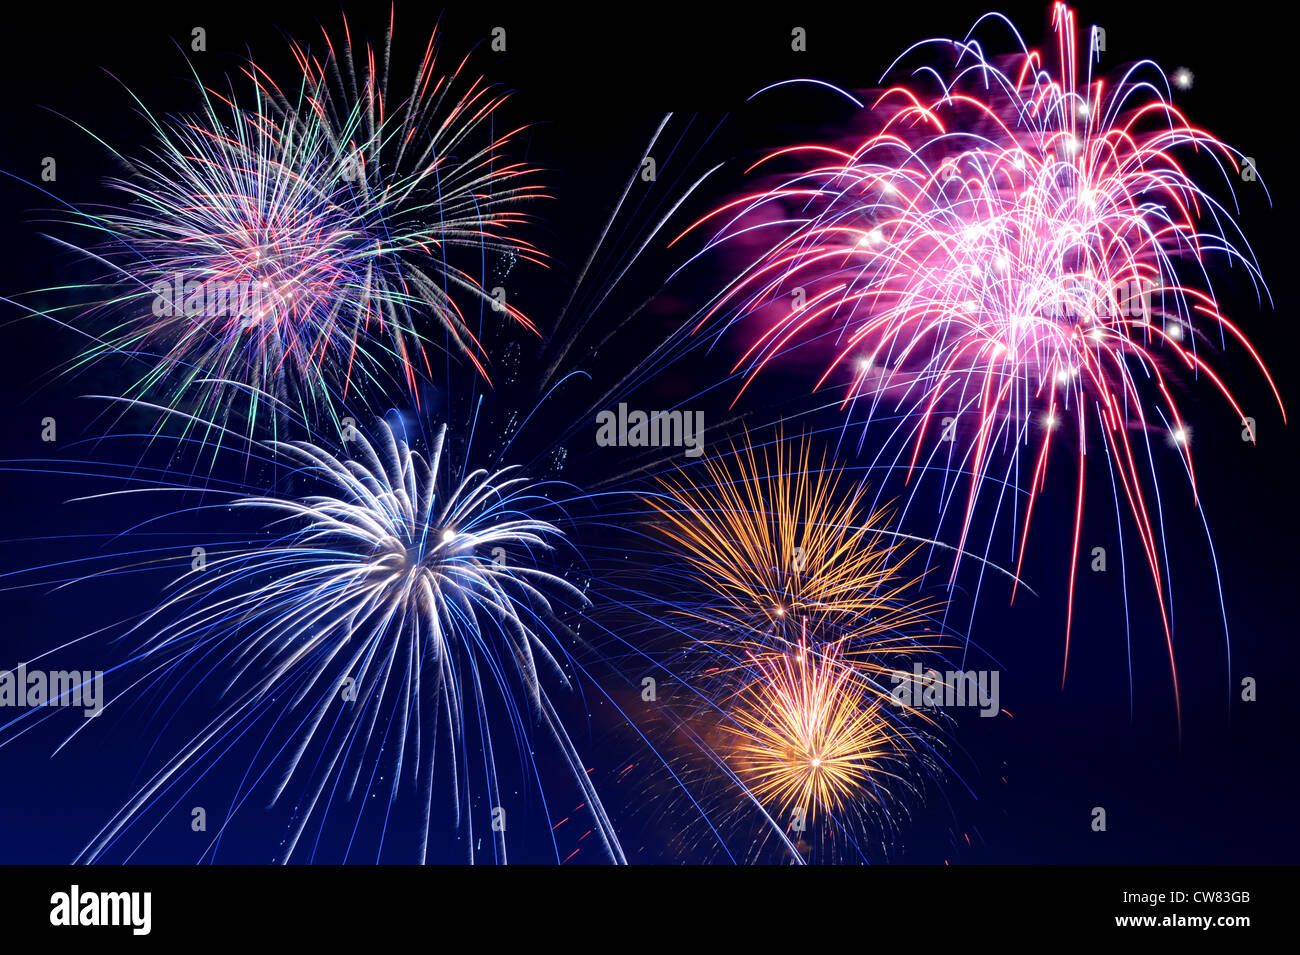 Fireworks of several colors bursting against a dark blue sky Stock Photo